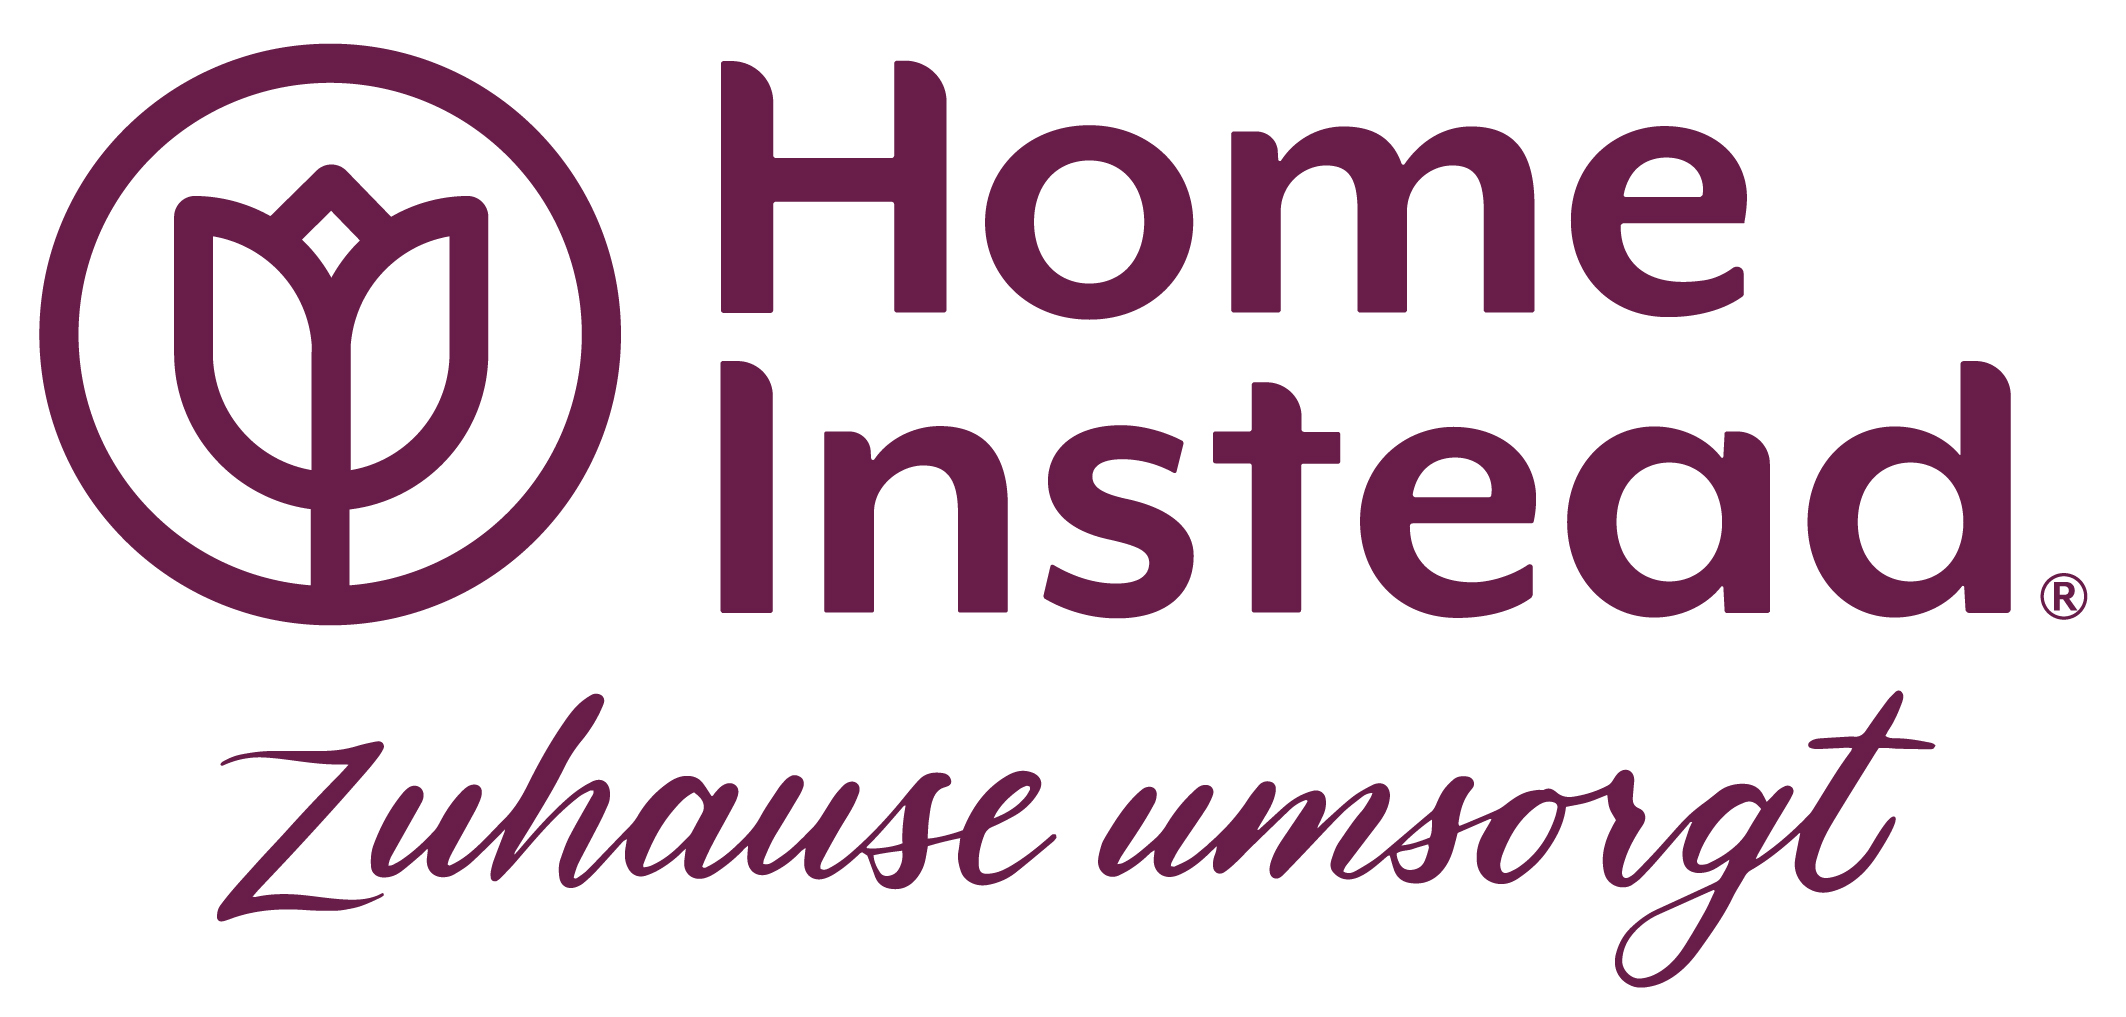 00_home instead logo